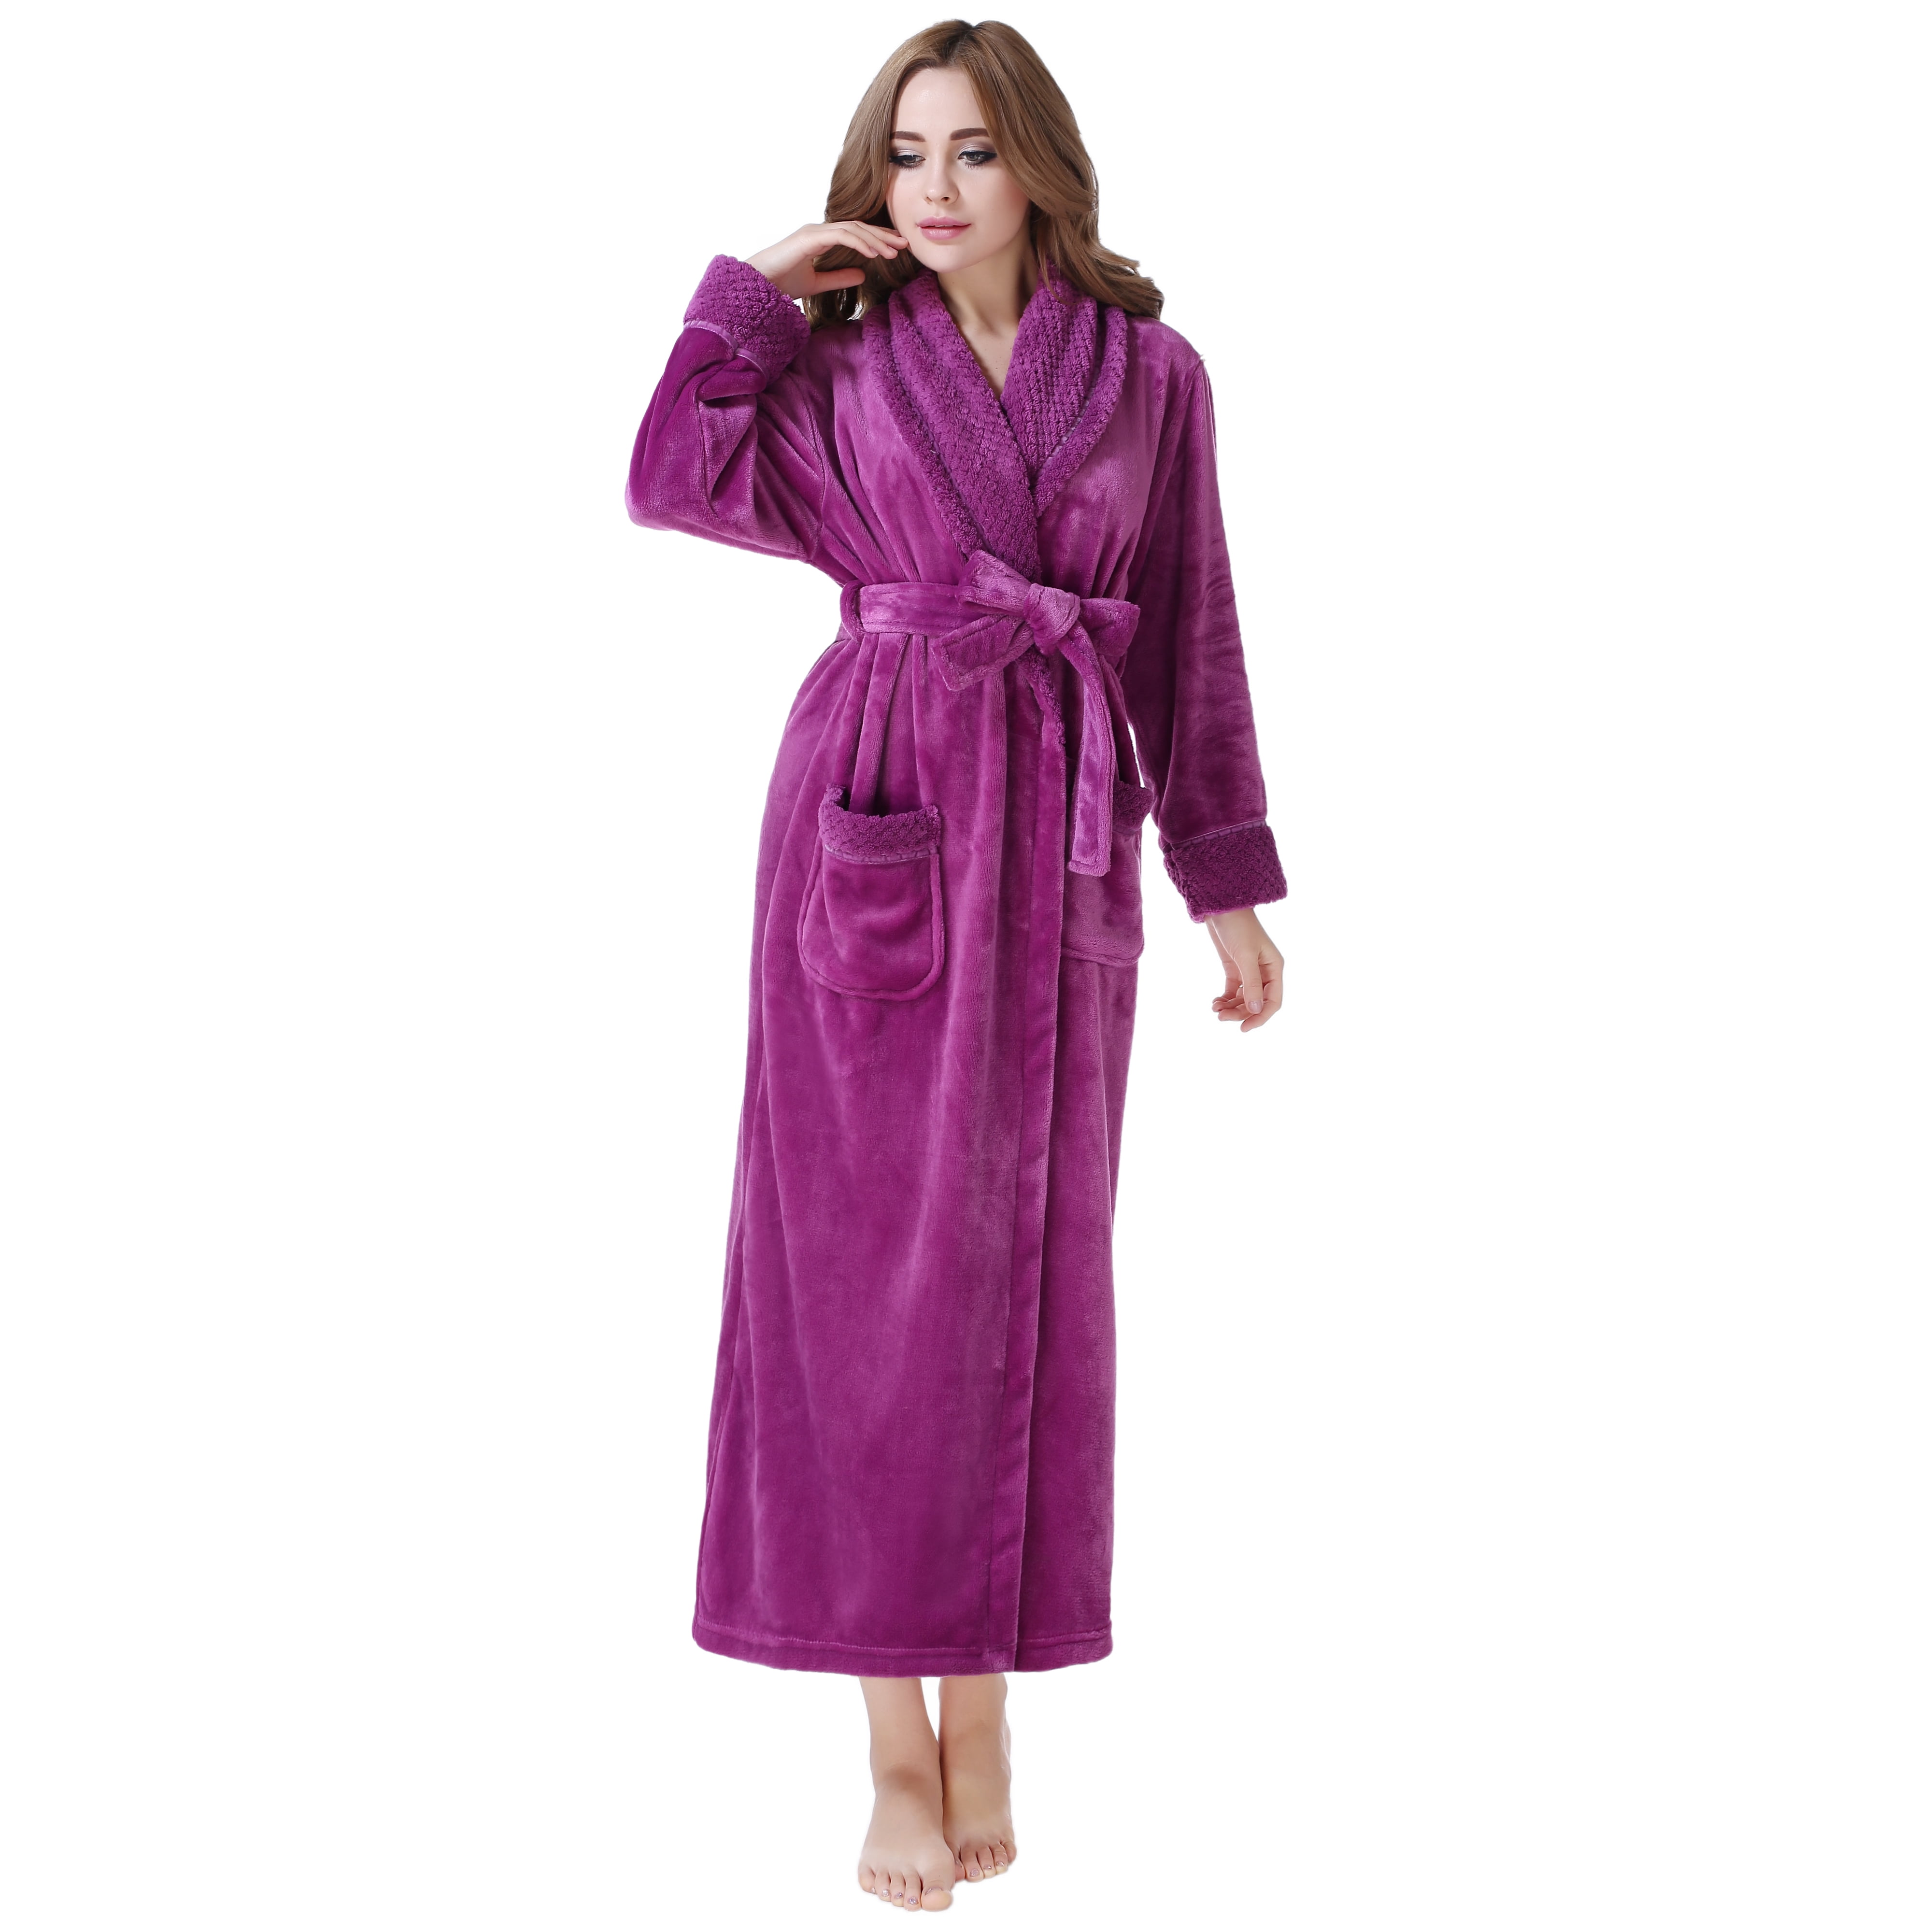 Richie House Women's Plush Soft Warm Fleece Bathrobe RH1591 - Walmart.com